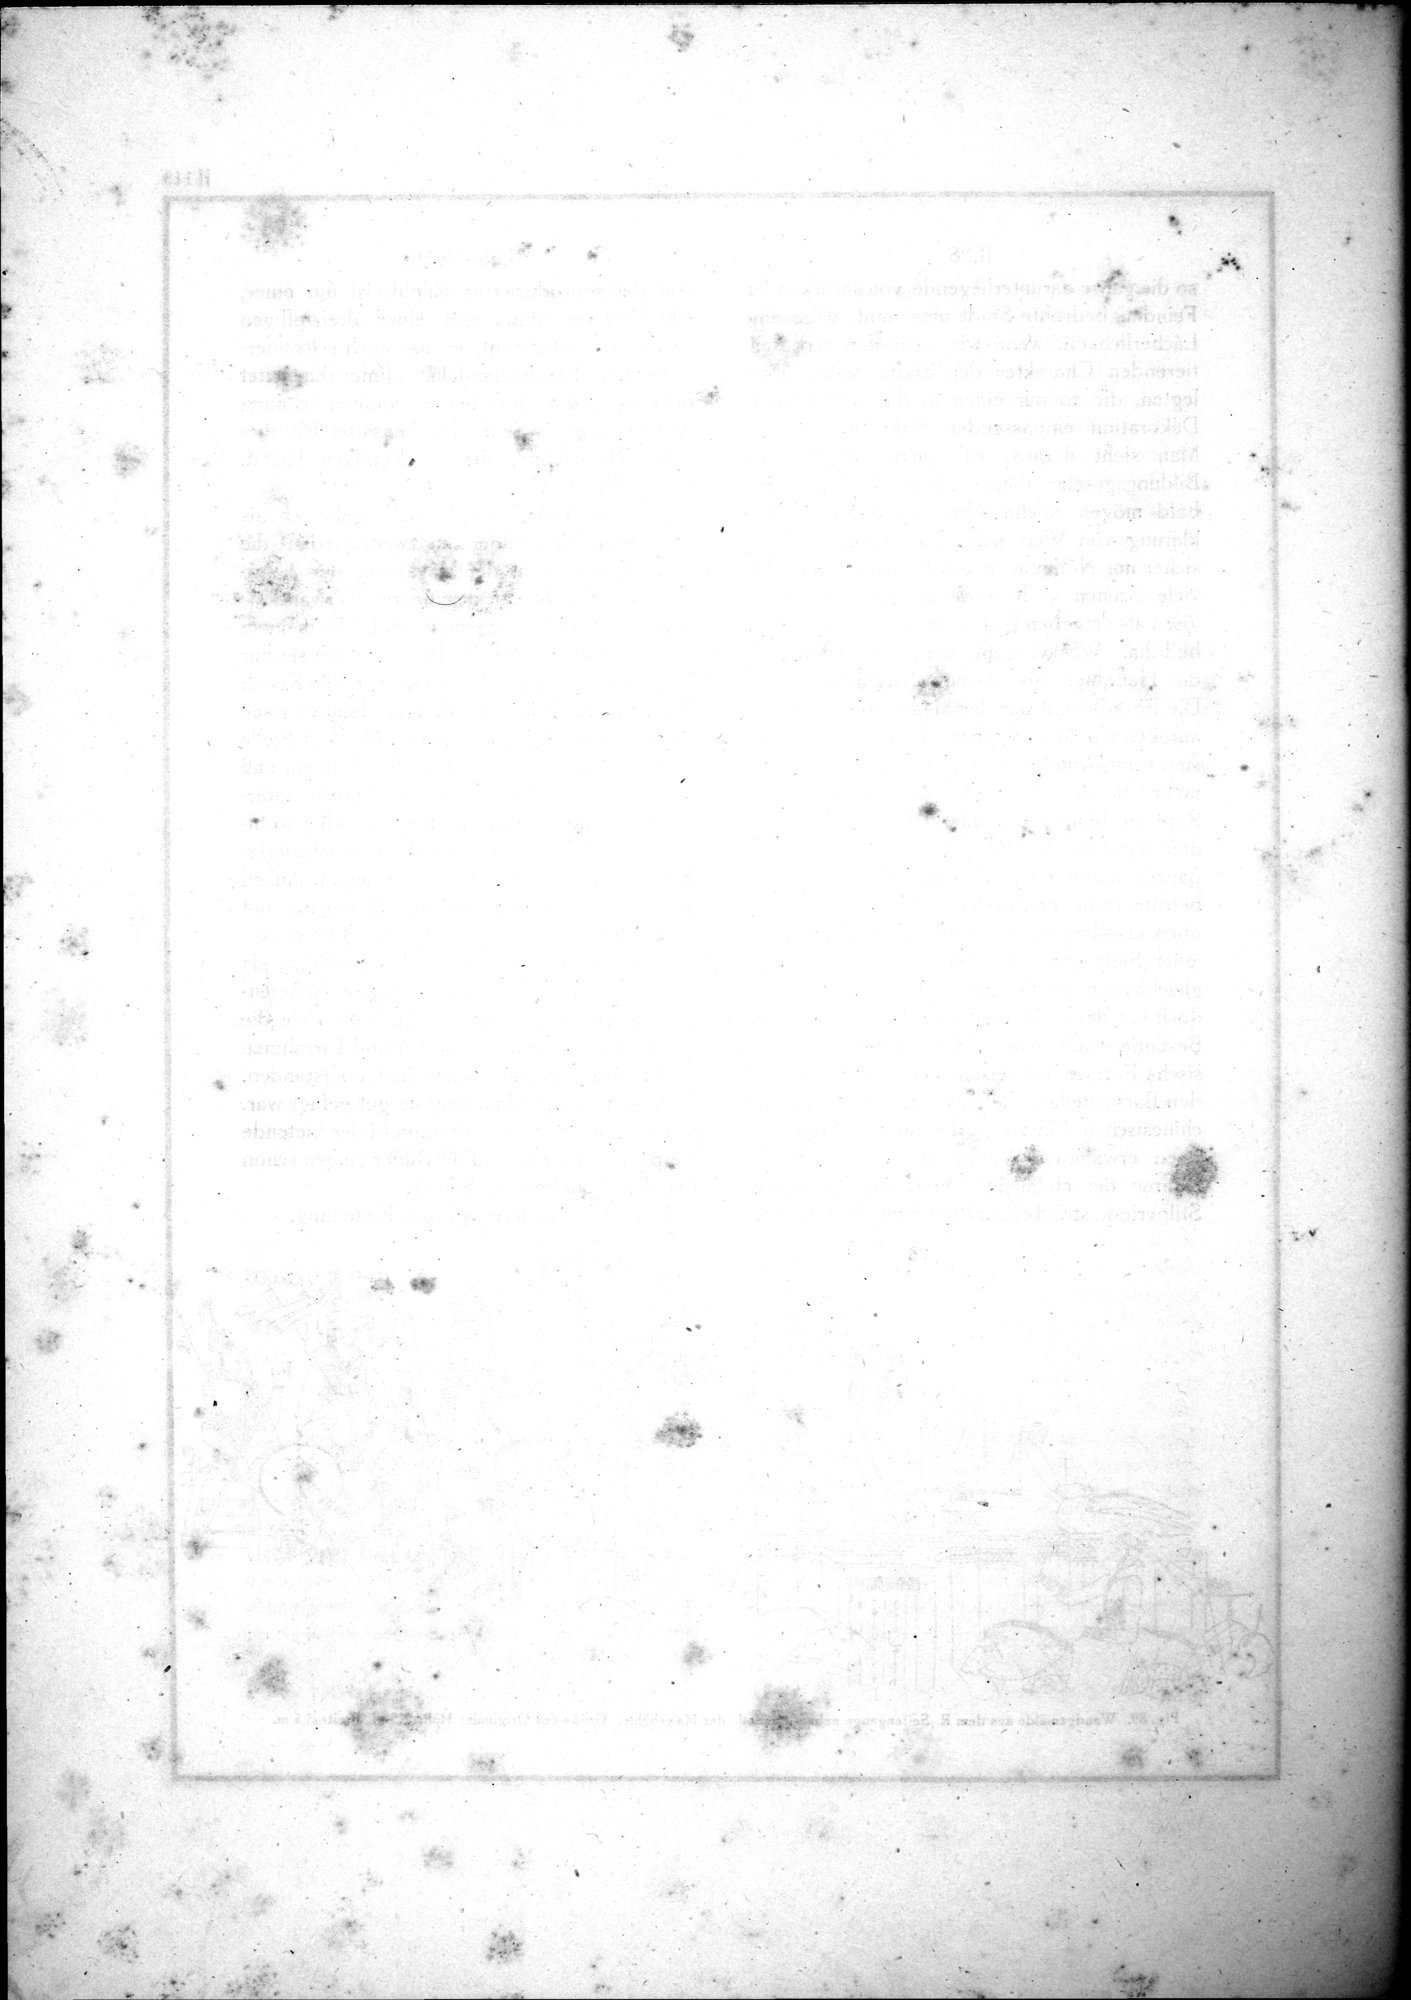 Alt-Kutscha : vol.1 / Page 236 (Grayscale High Resolution Image)